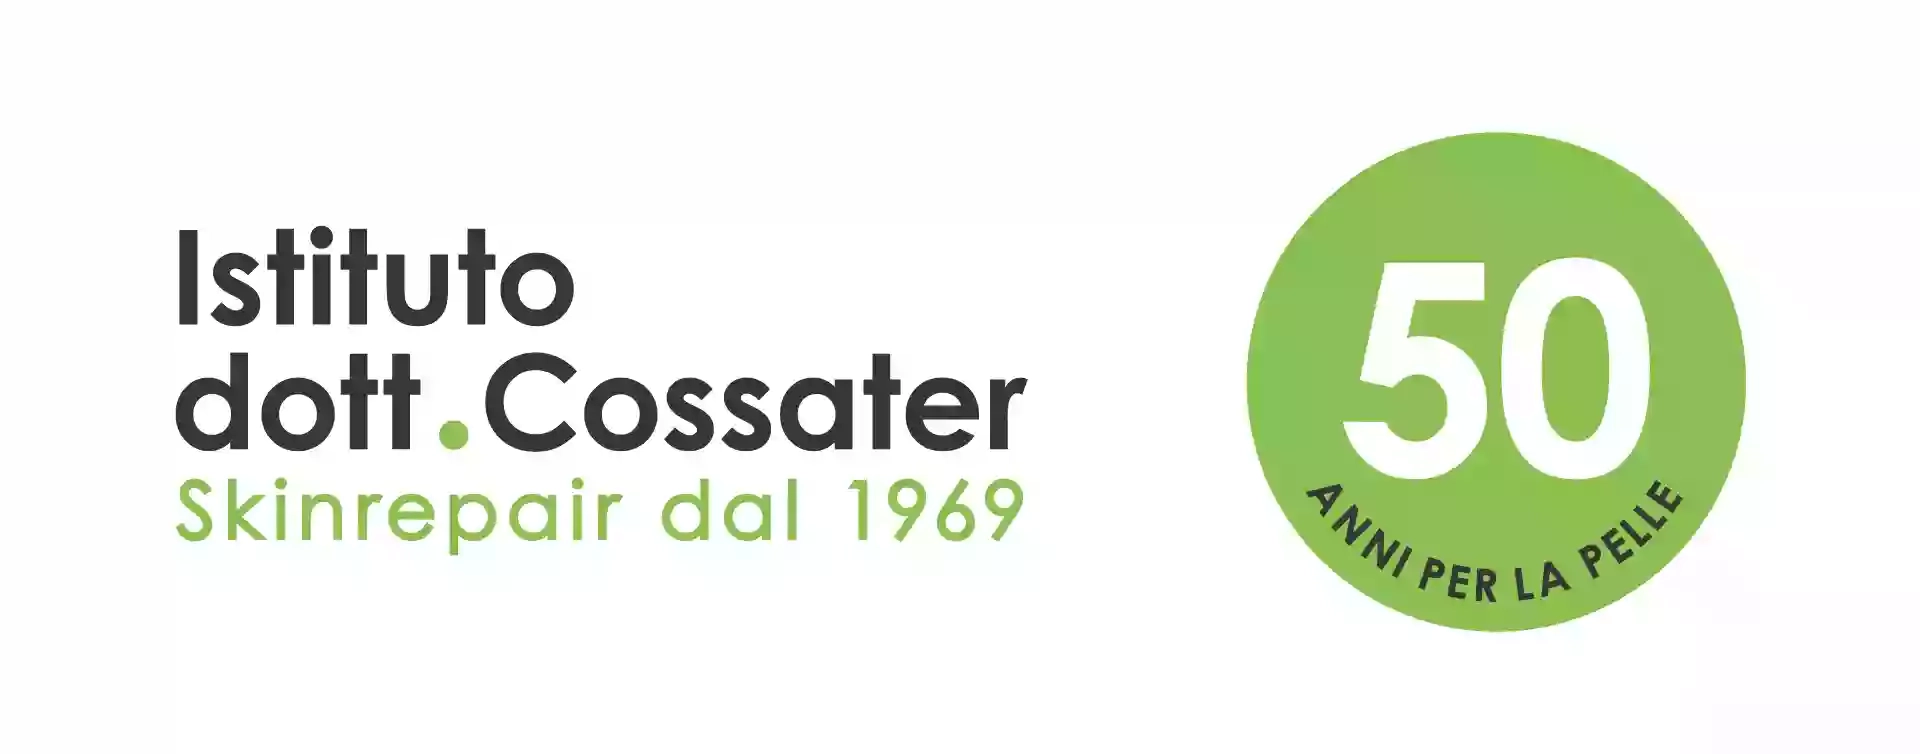 Dr.Cossater